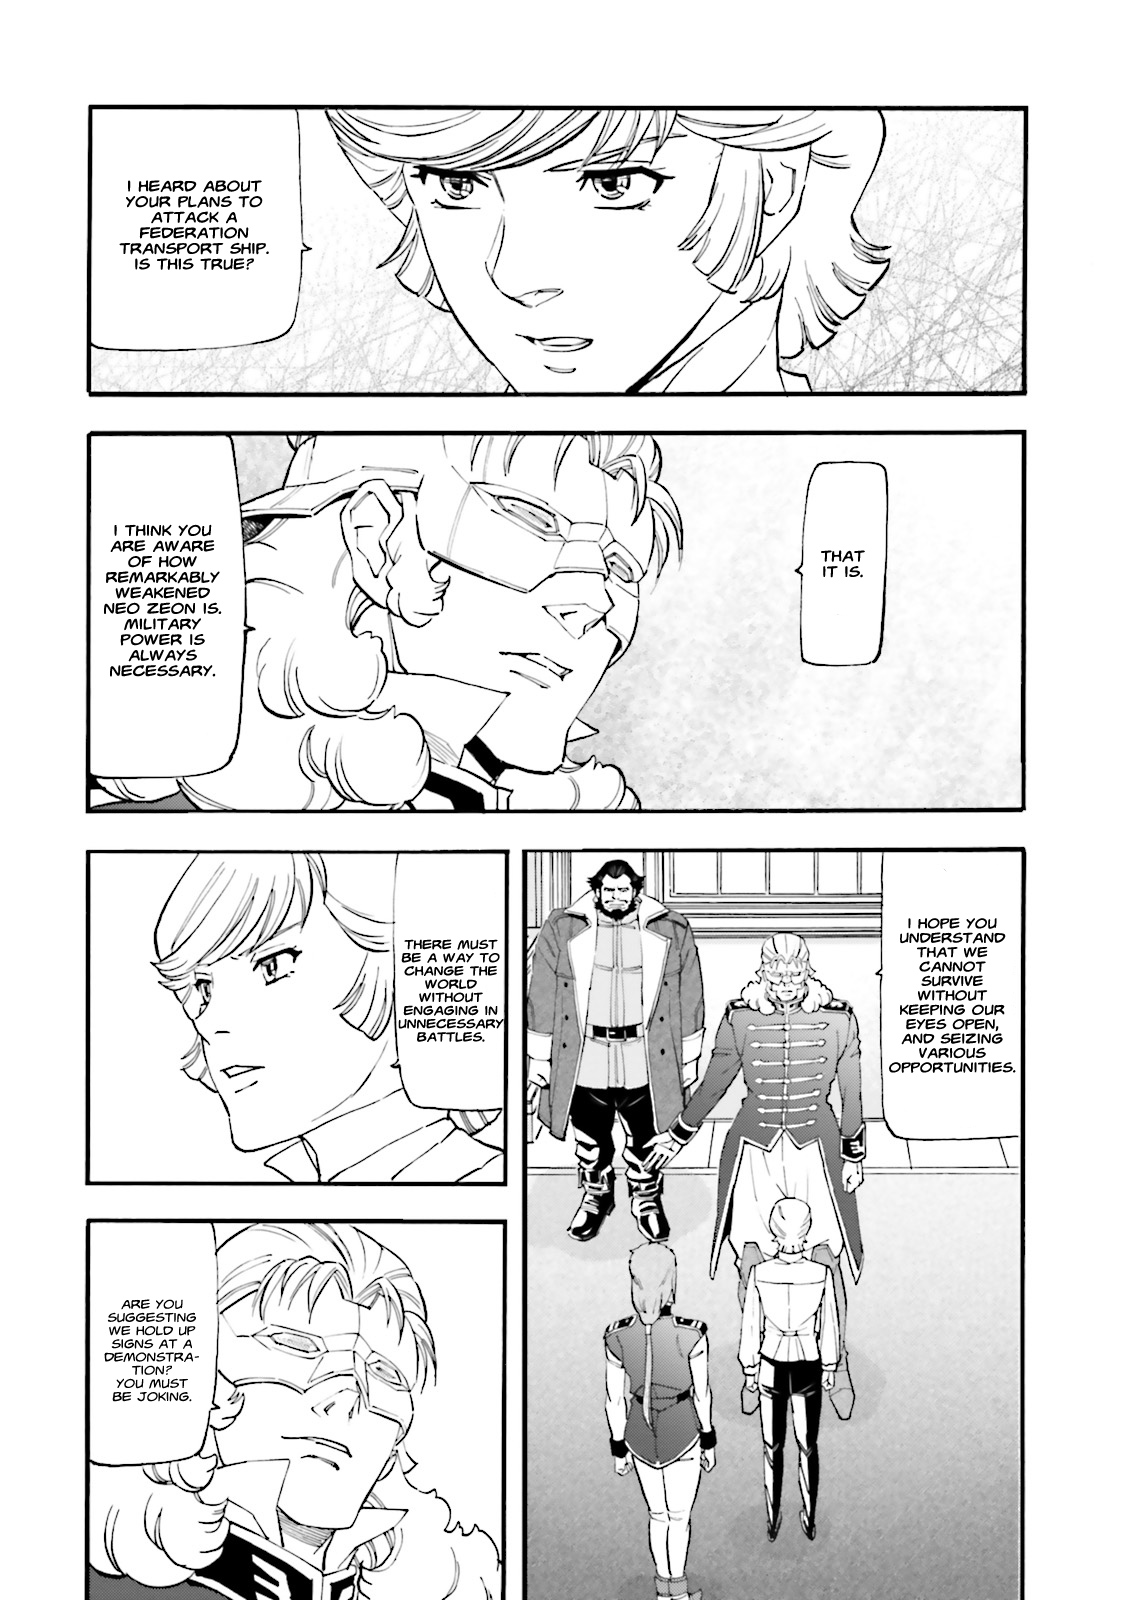 Kidou Senshi Gundam UC (Unicorn) Bande Dessinée: Episode 0 Vol. 1 Ch. 5 Neo Zeon <Dangerous Signs>